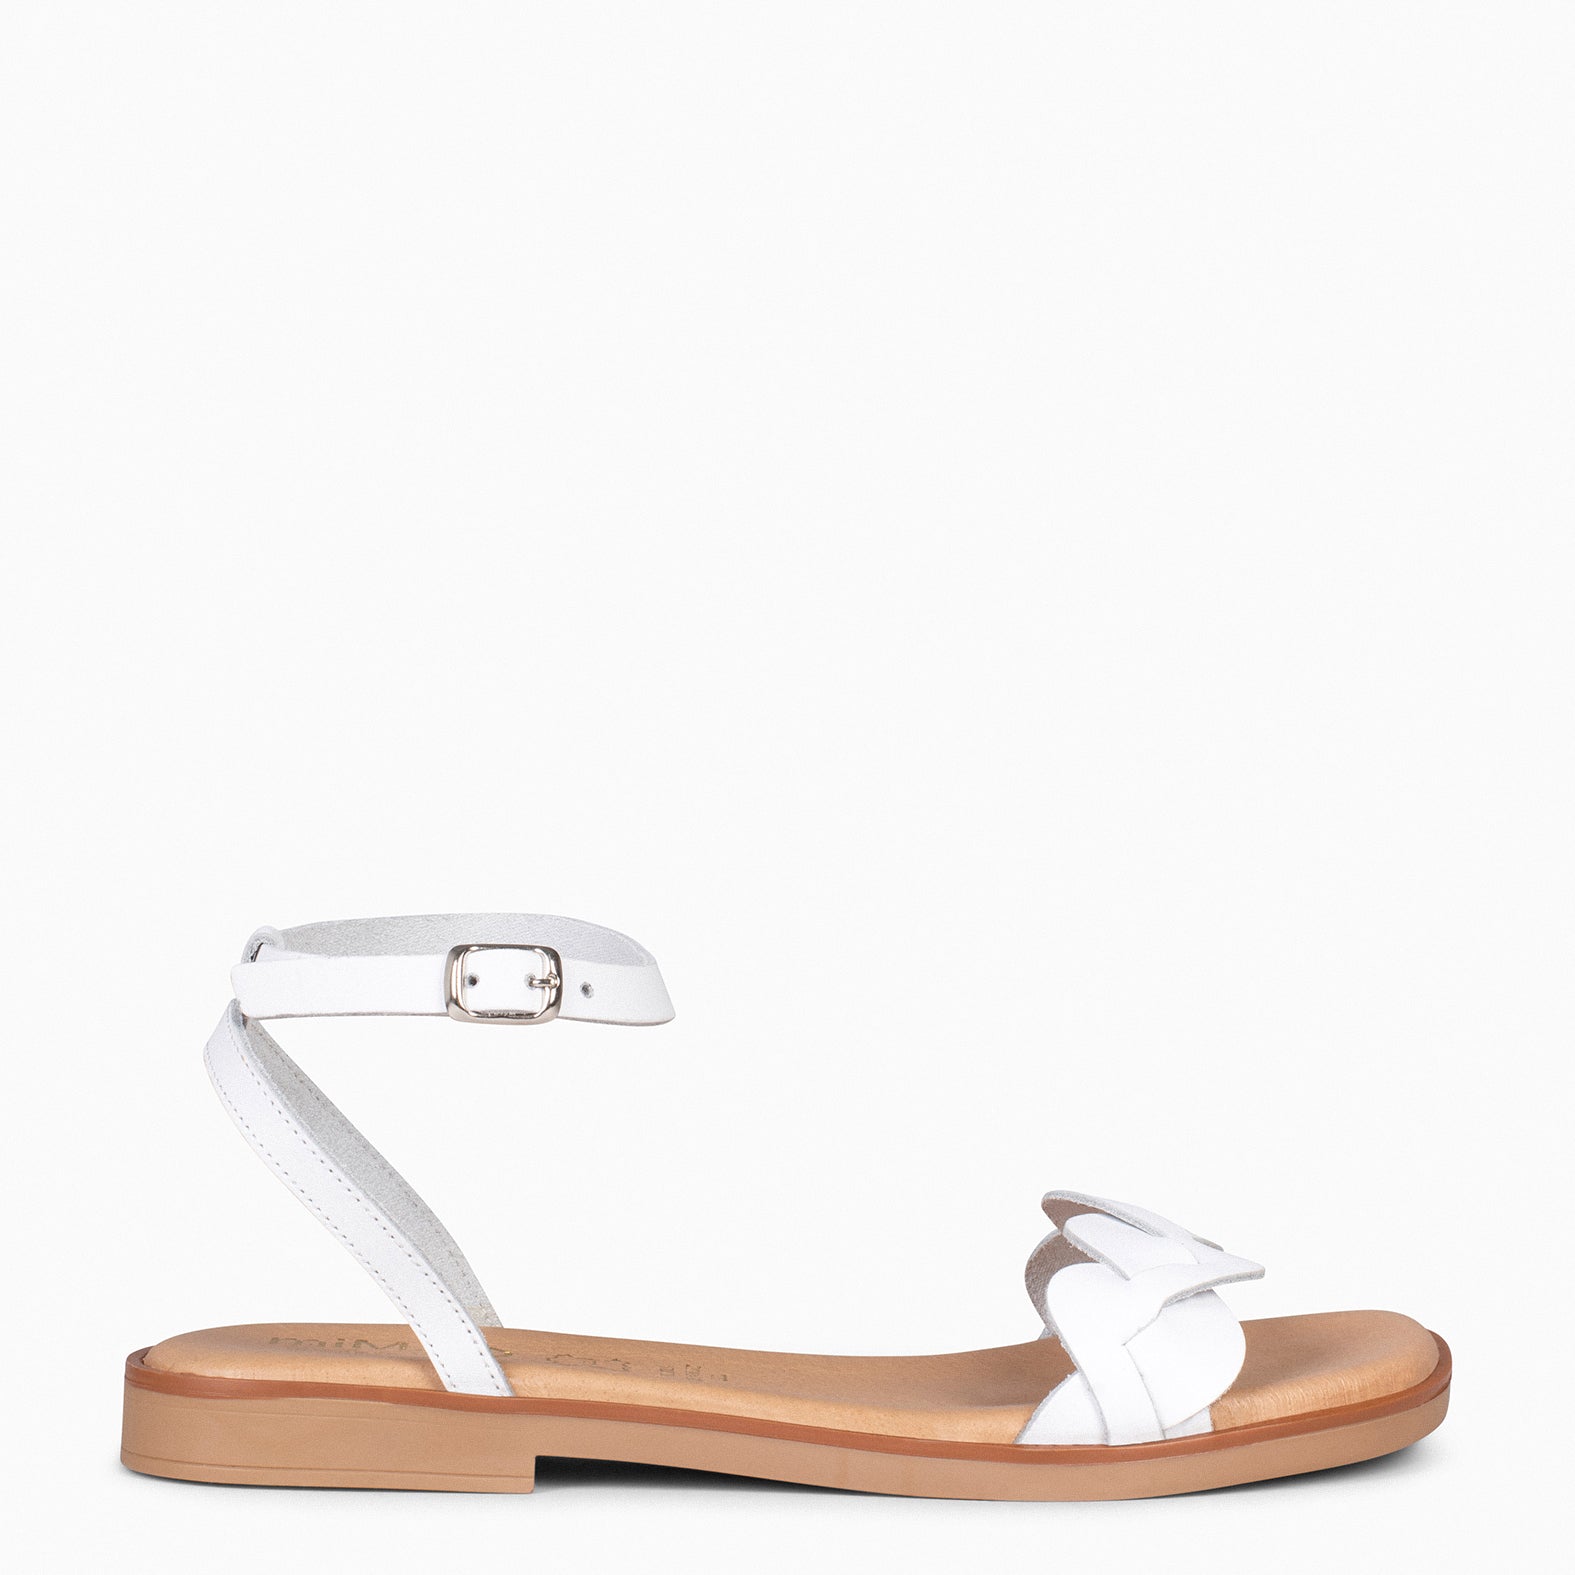 ARECA - WHITE Women's Flat Sandals